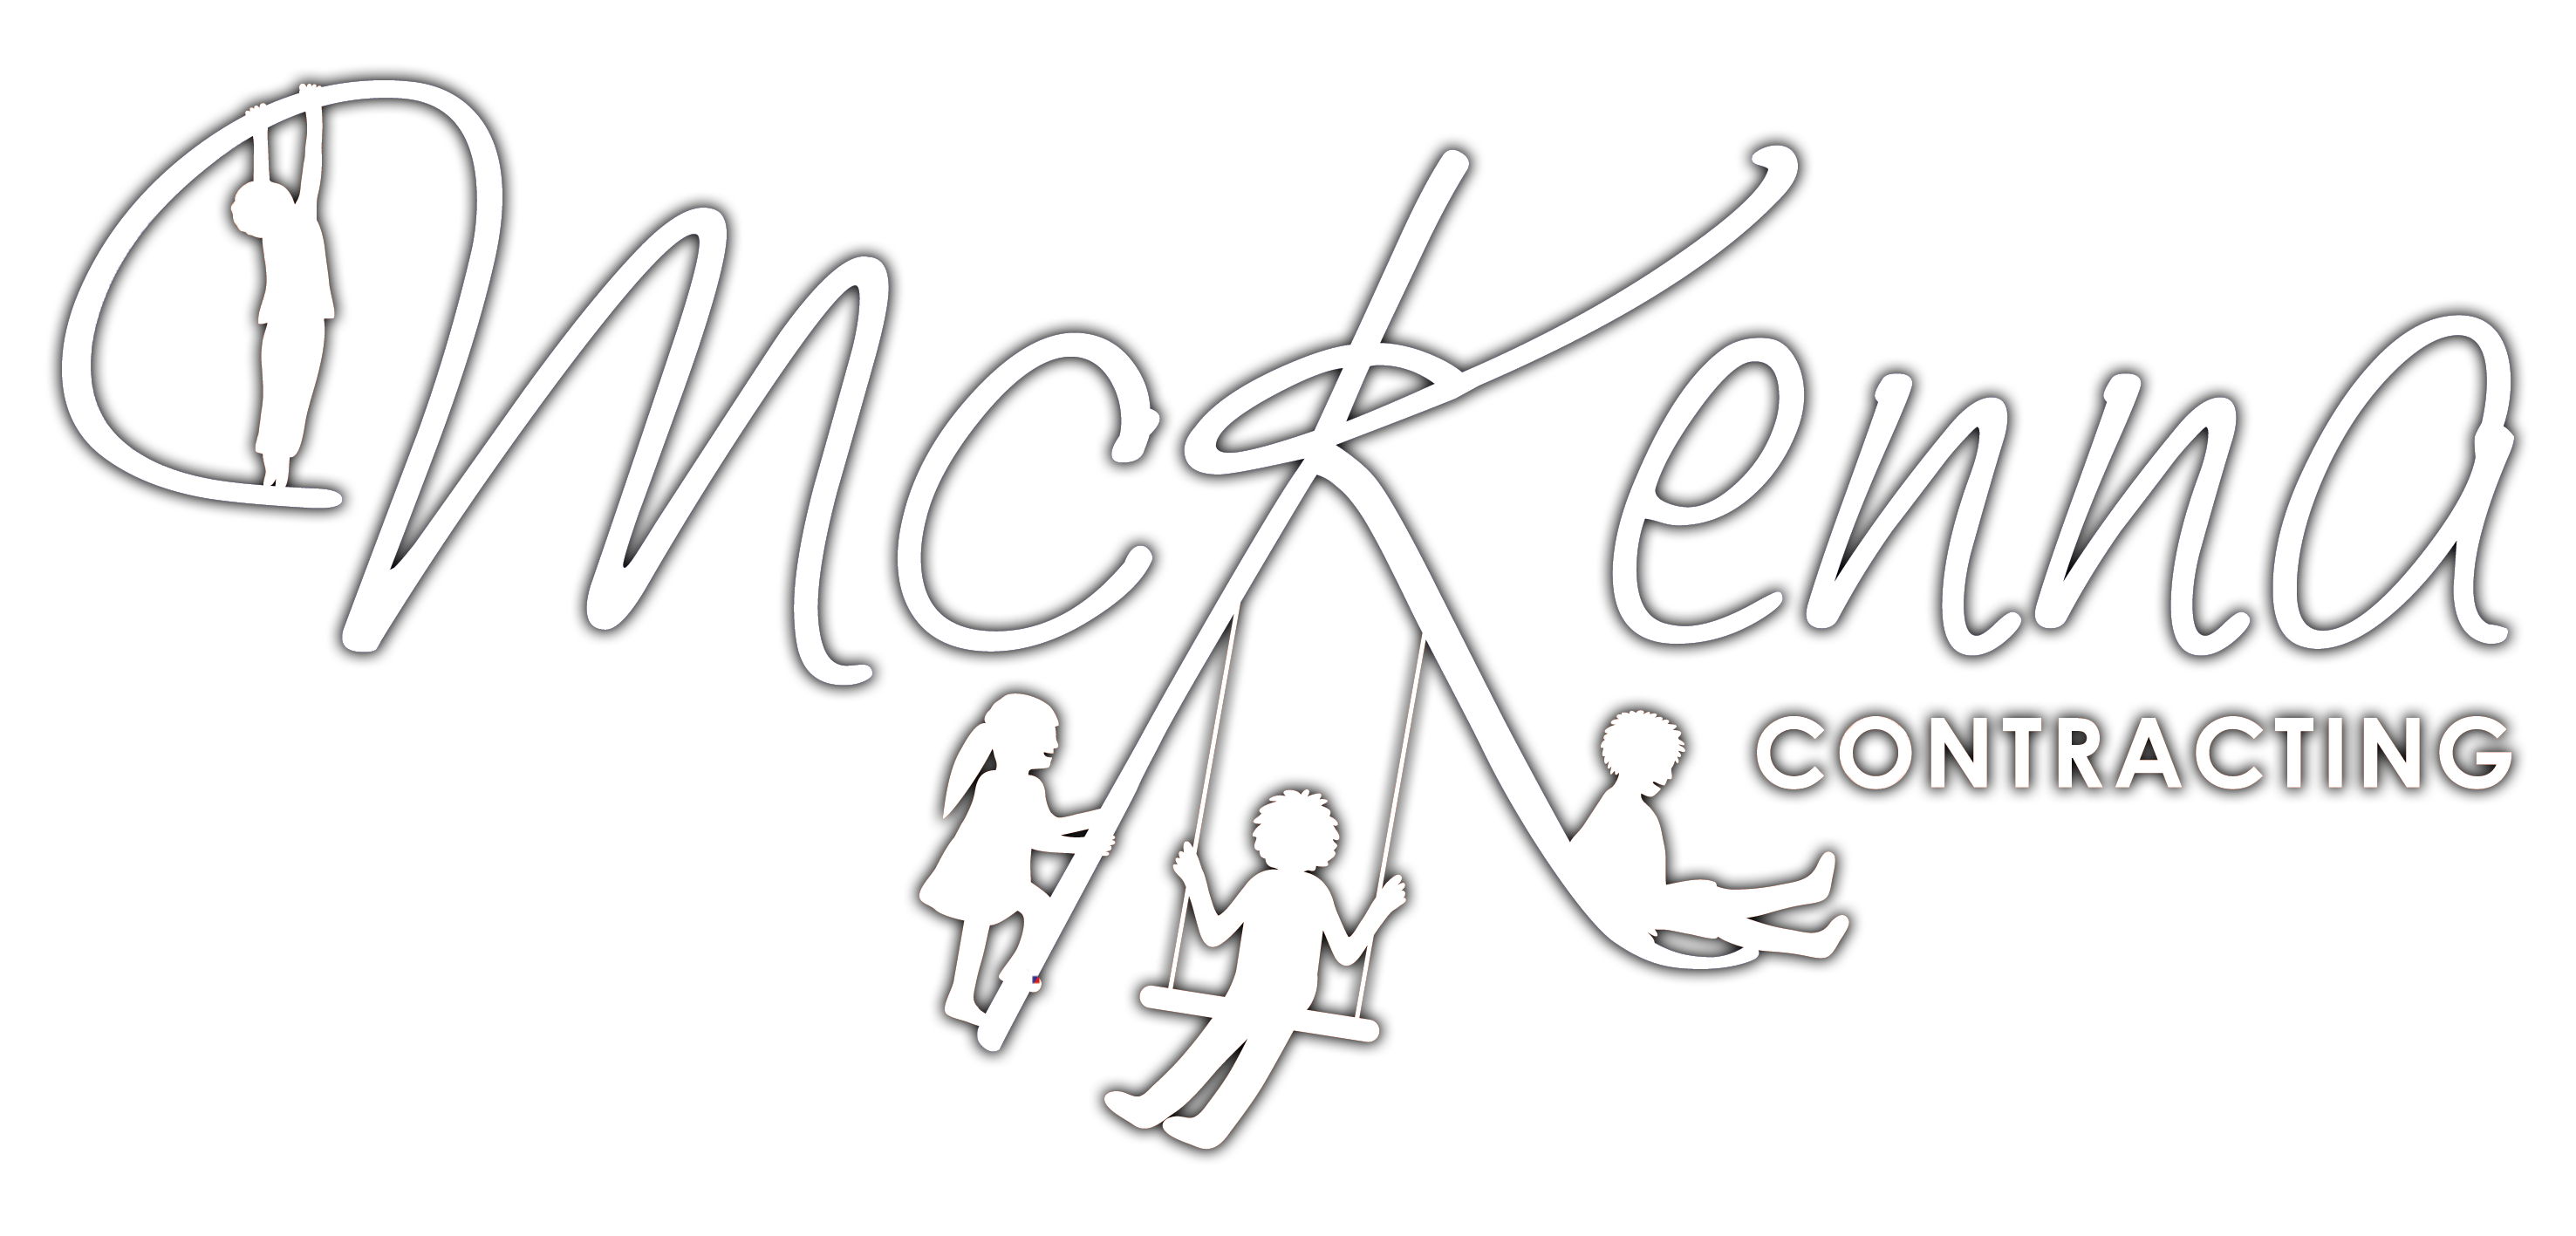 McKenna Contracting